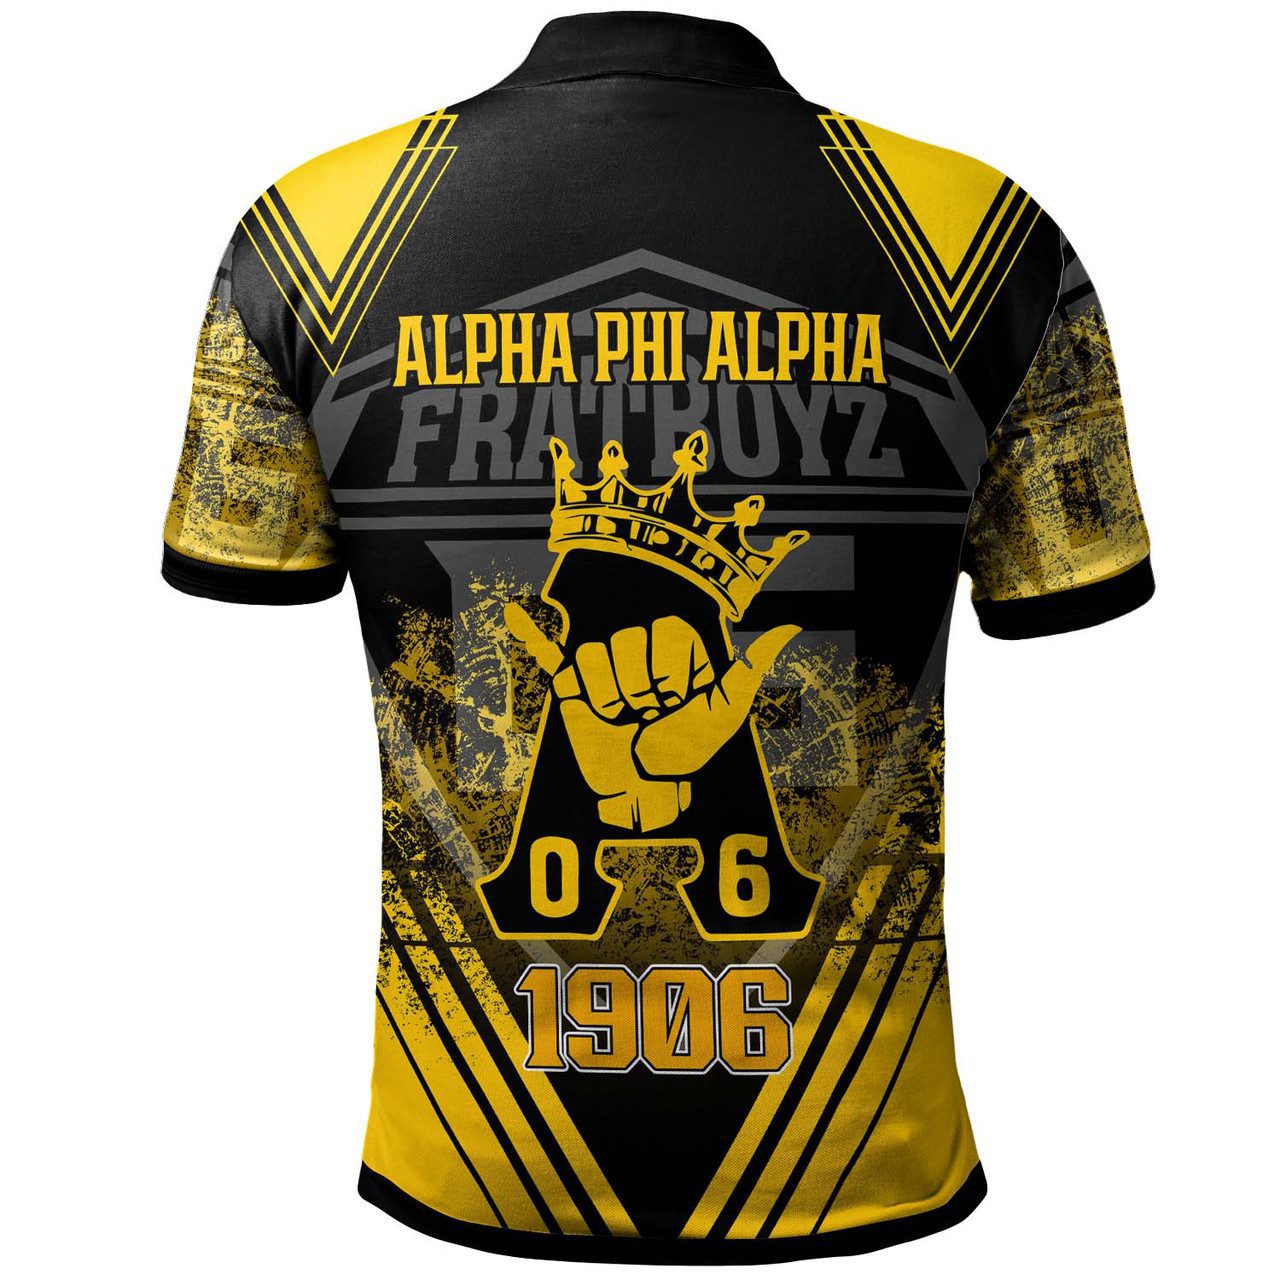 Alpha Phi Alpha Polo Shirt – Custom Fraternity Pyramid Fratboyz Patterns Polo Shirt